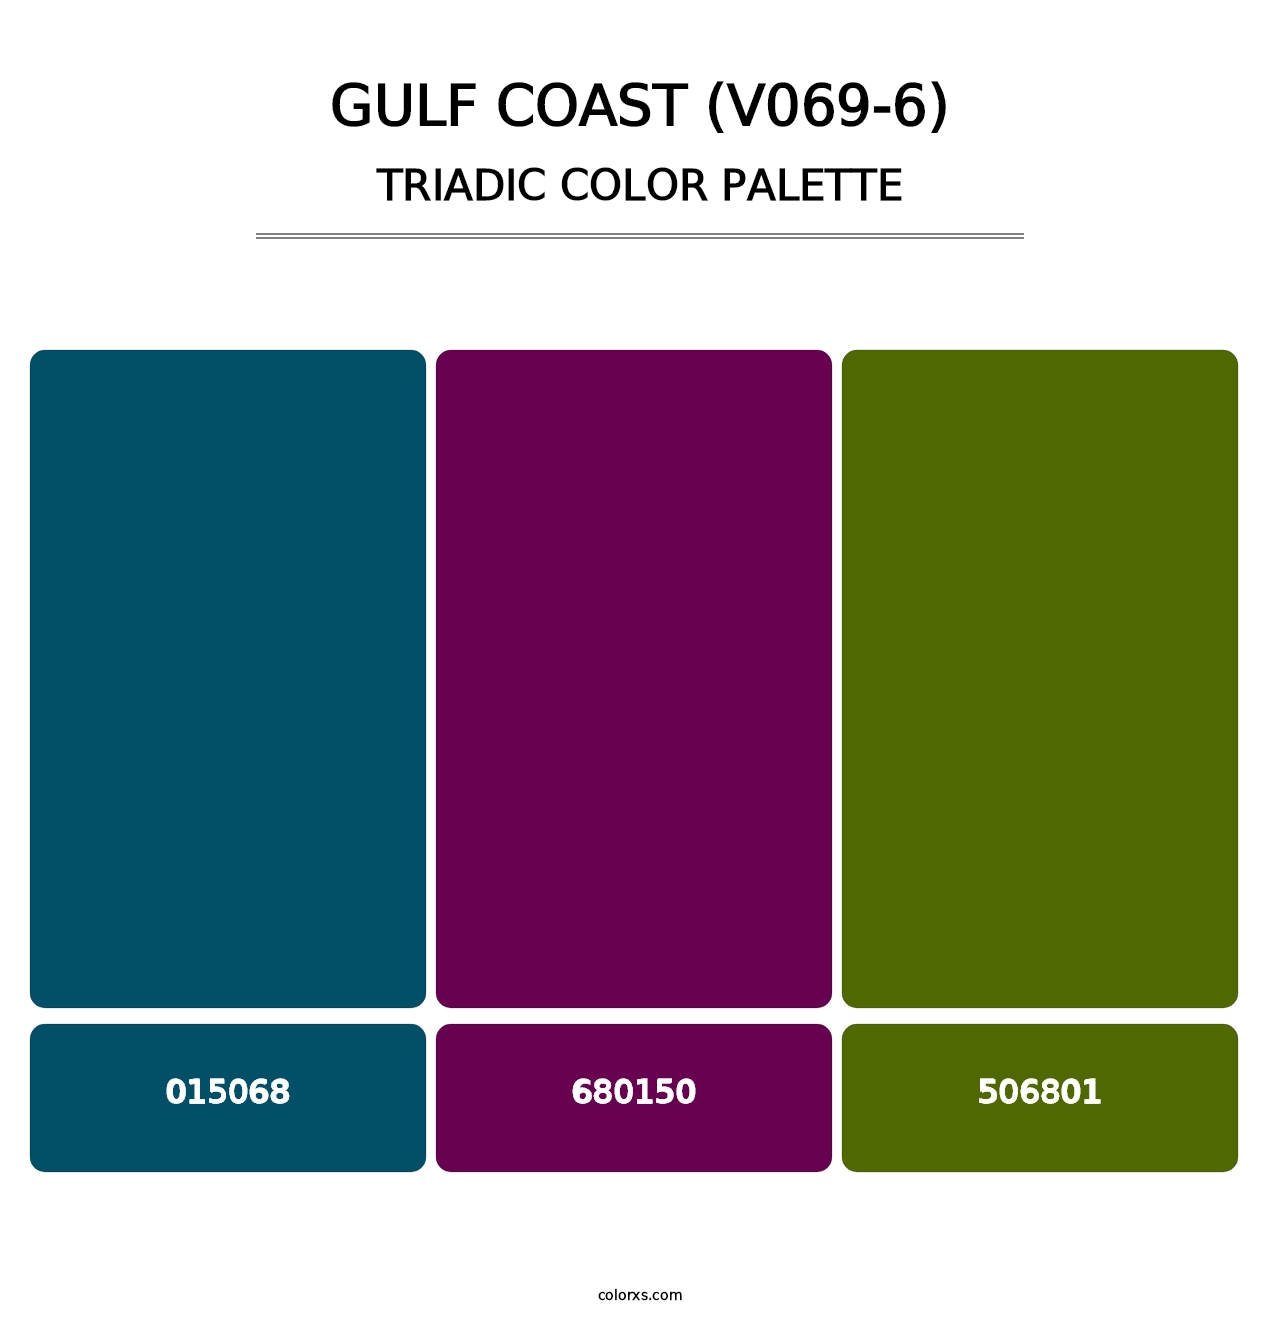 Gulf Coast (V069-6) - Triadic Color Palette